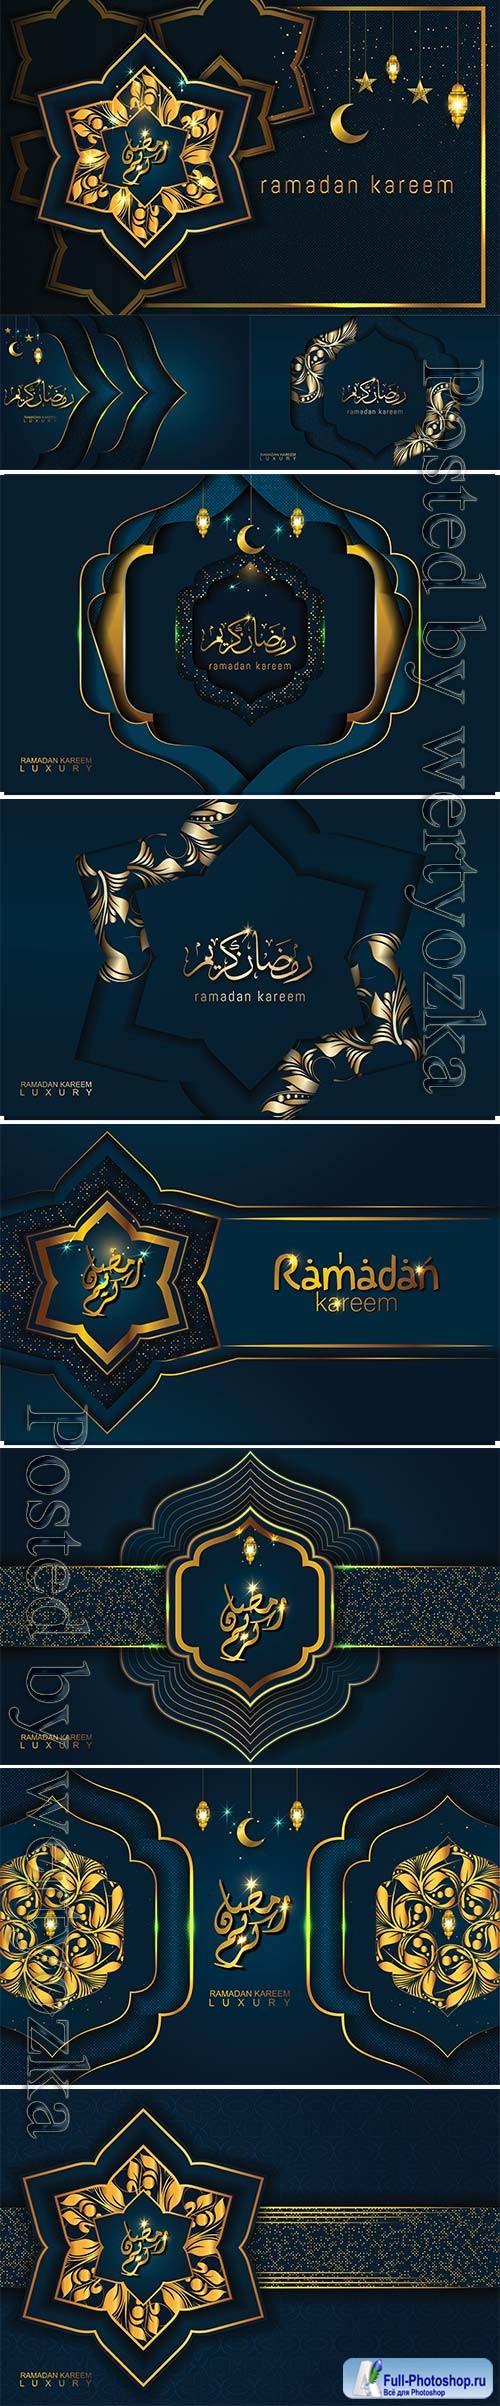 Ramadan Kareem in luxury style with arabic calligraphy